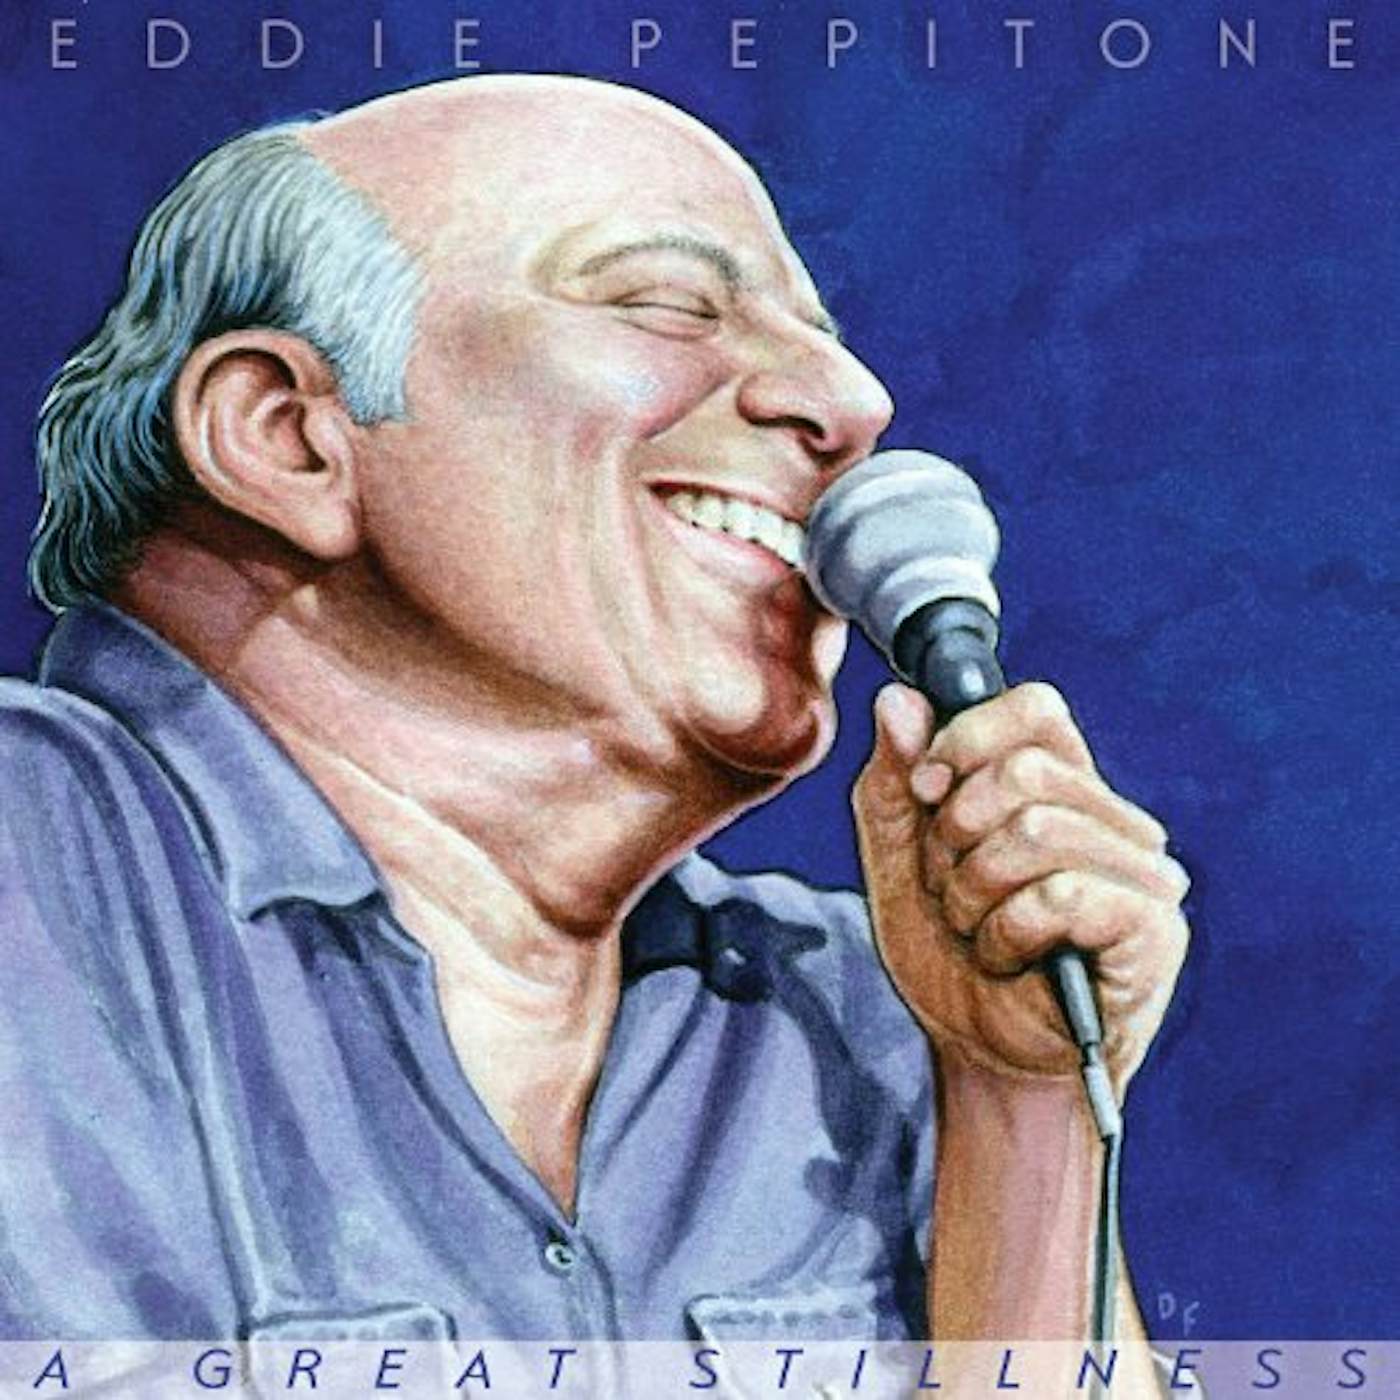 Eddie Pepitone GREAT STILLNESS Vinyl Record